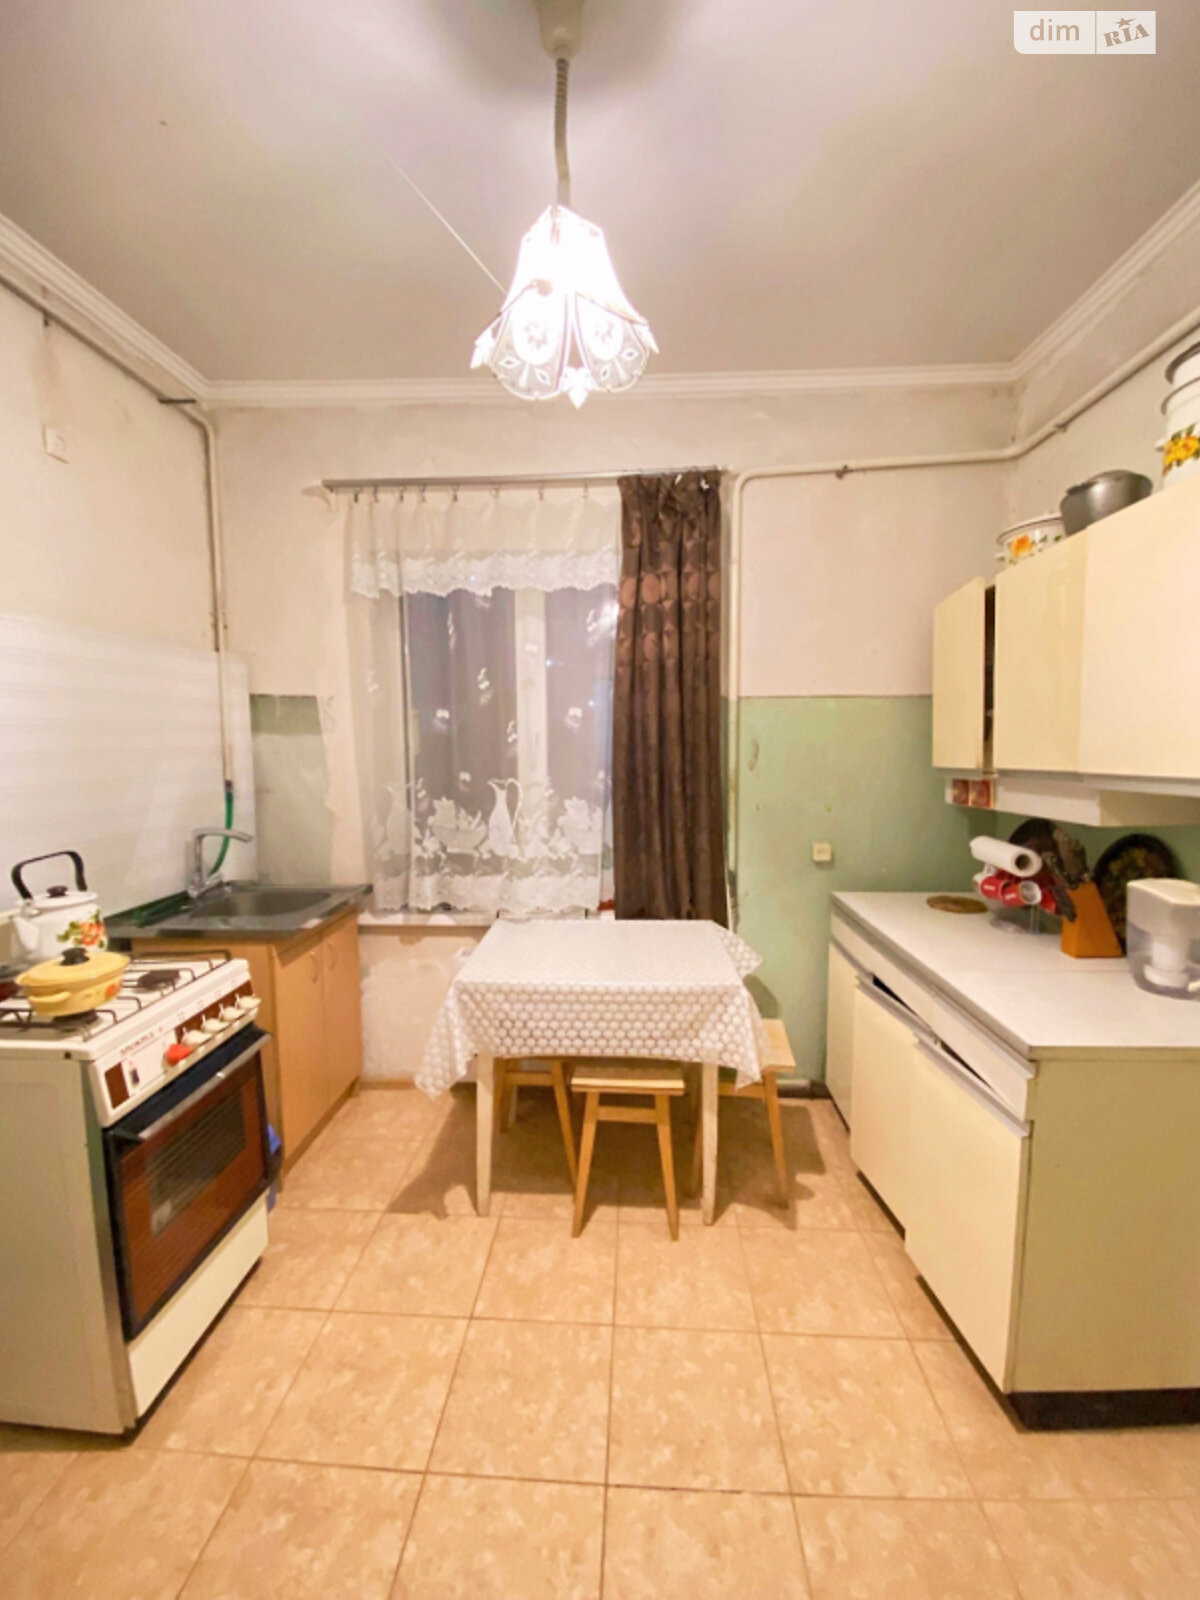 Продажа двухкомнатной квартиры в Чернигове, на ул. Академика Павлова 2А, район 5 углов фото 1